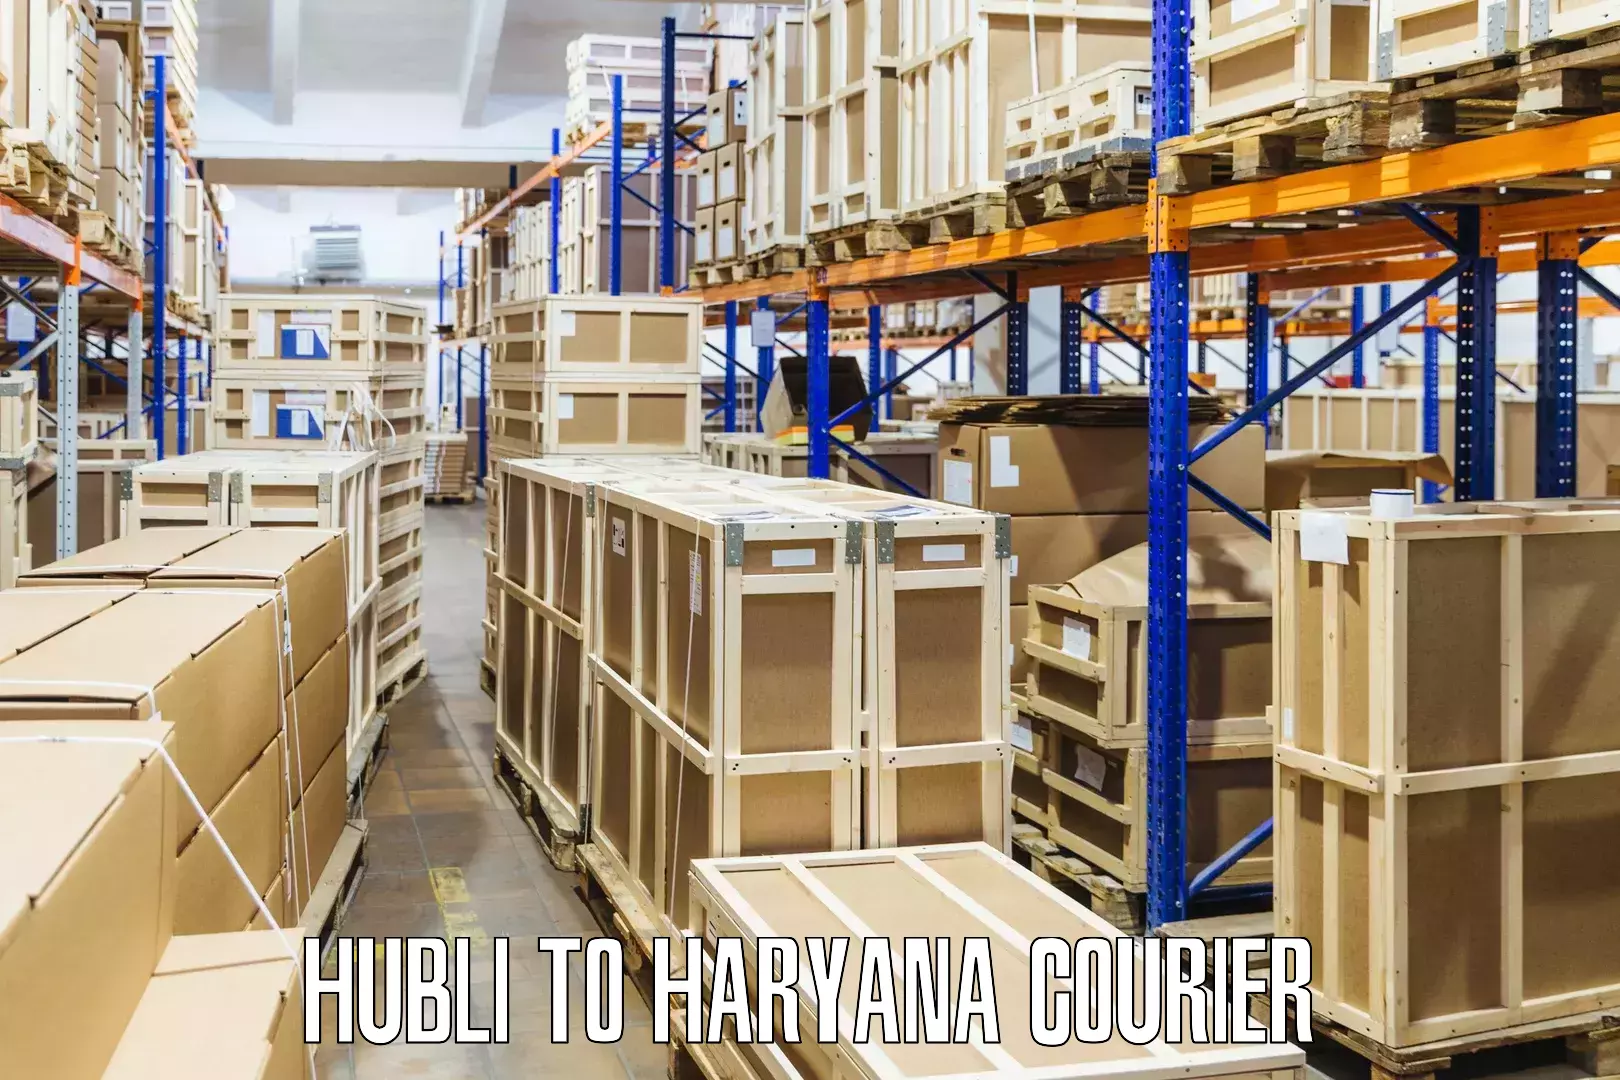 Doorstep delivery service Hubli to Haryana